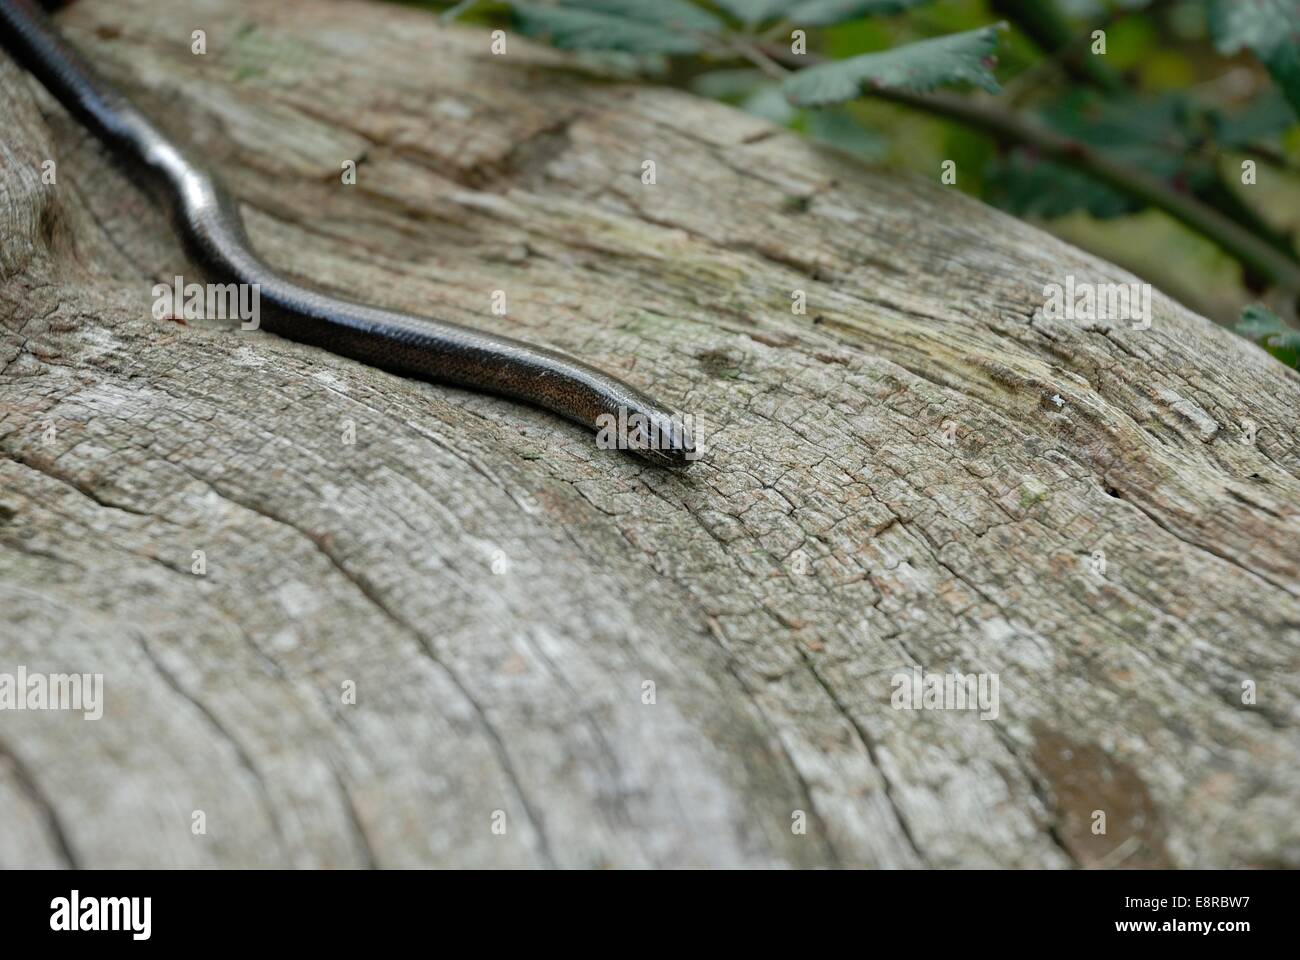 Images capture Anguis fragilis snake Stock Photo